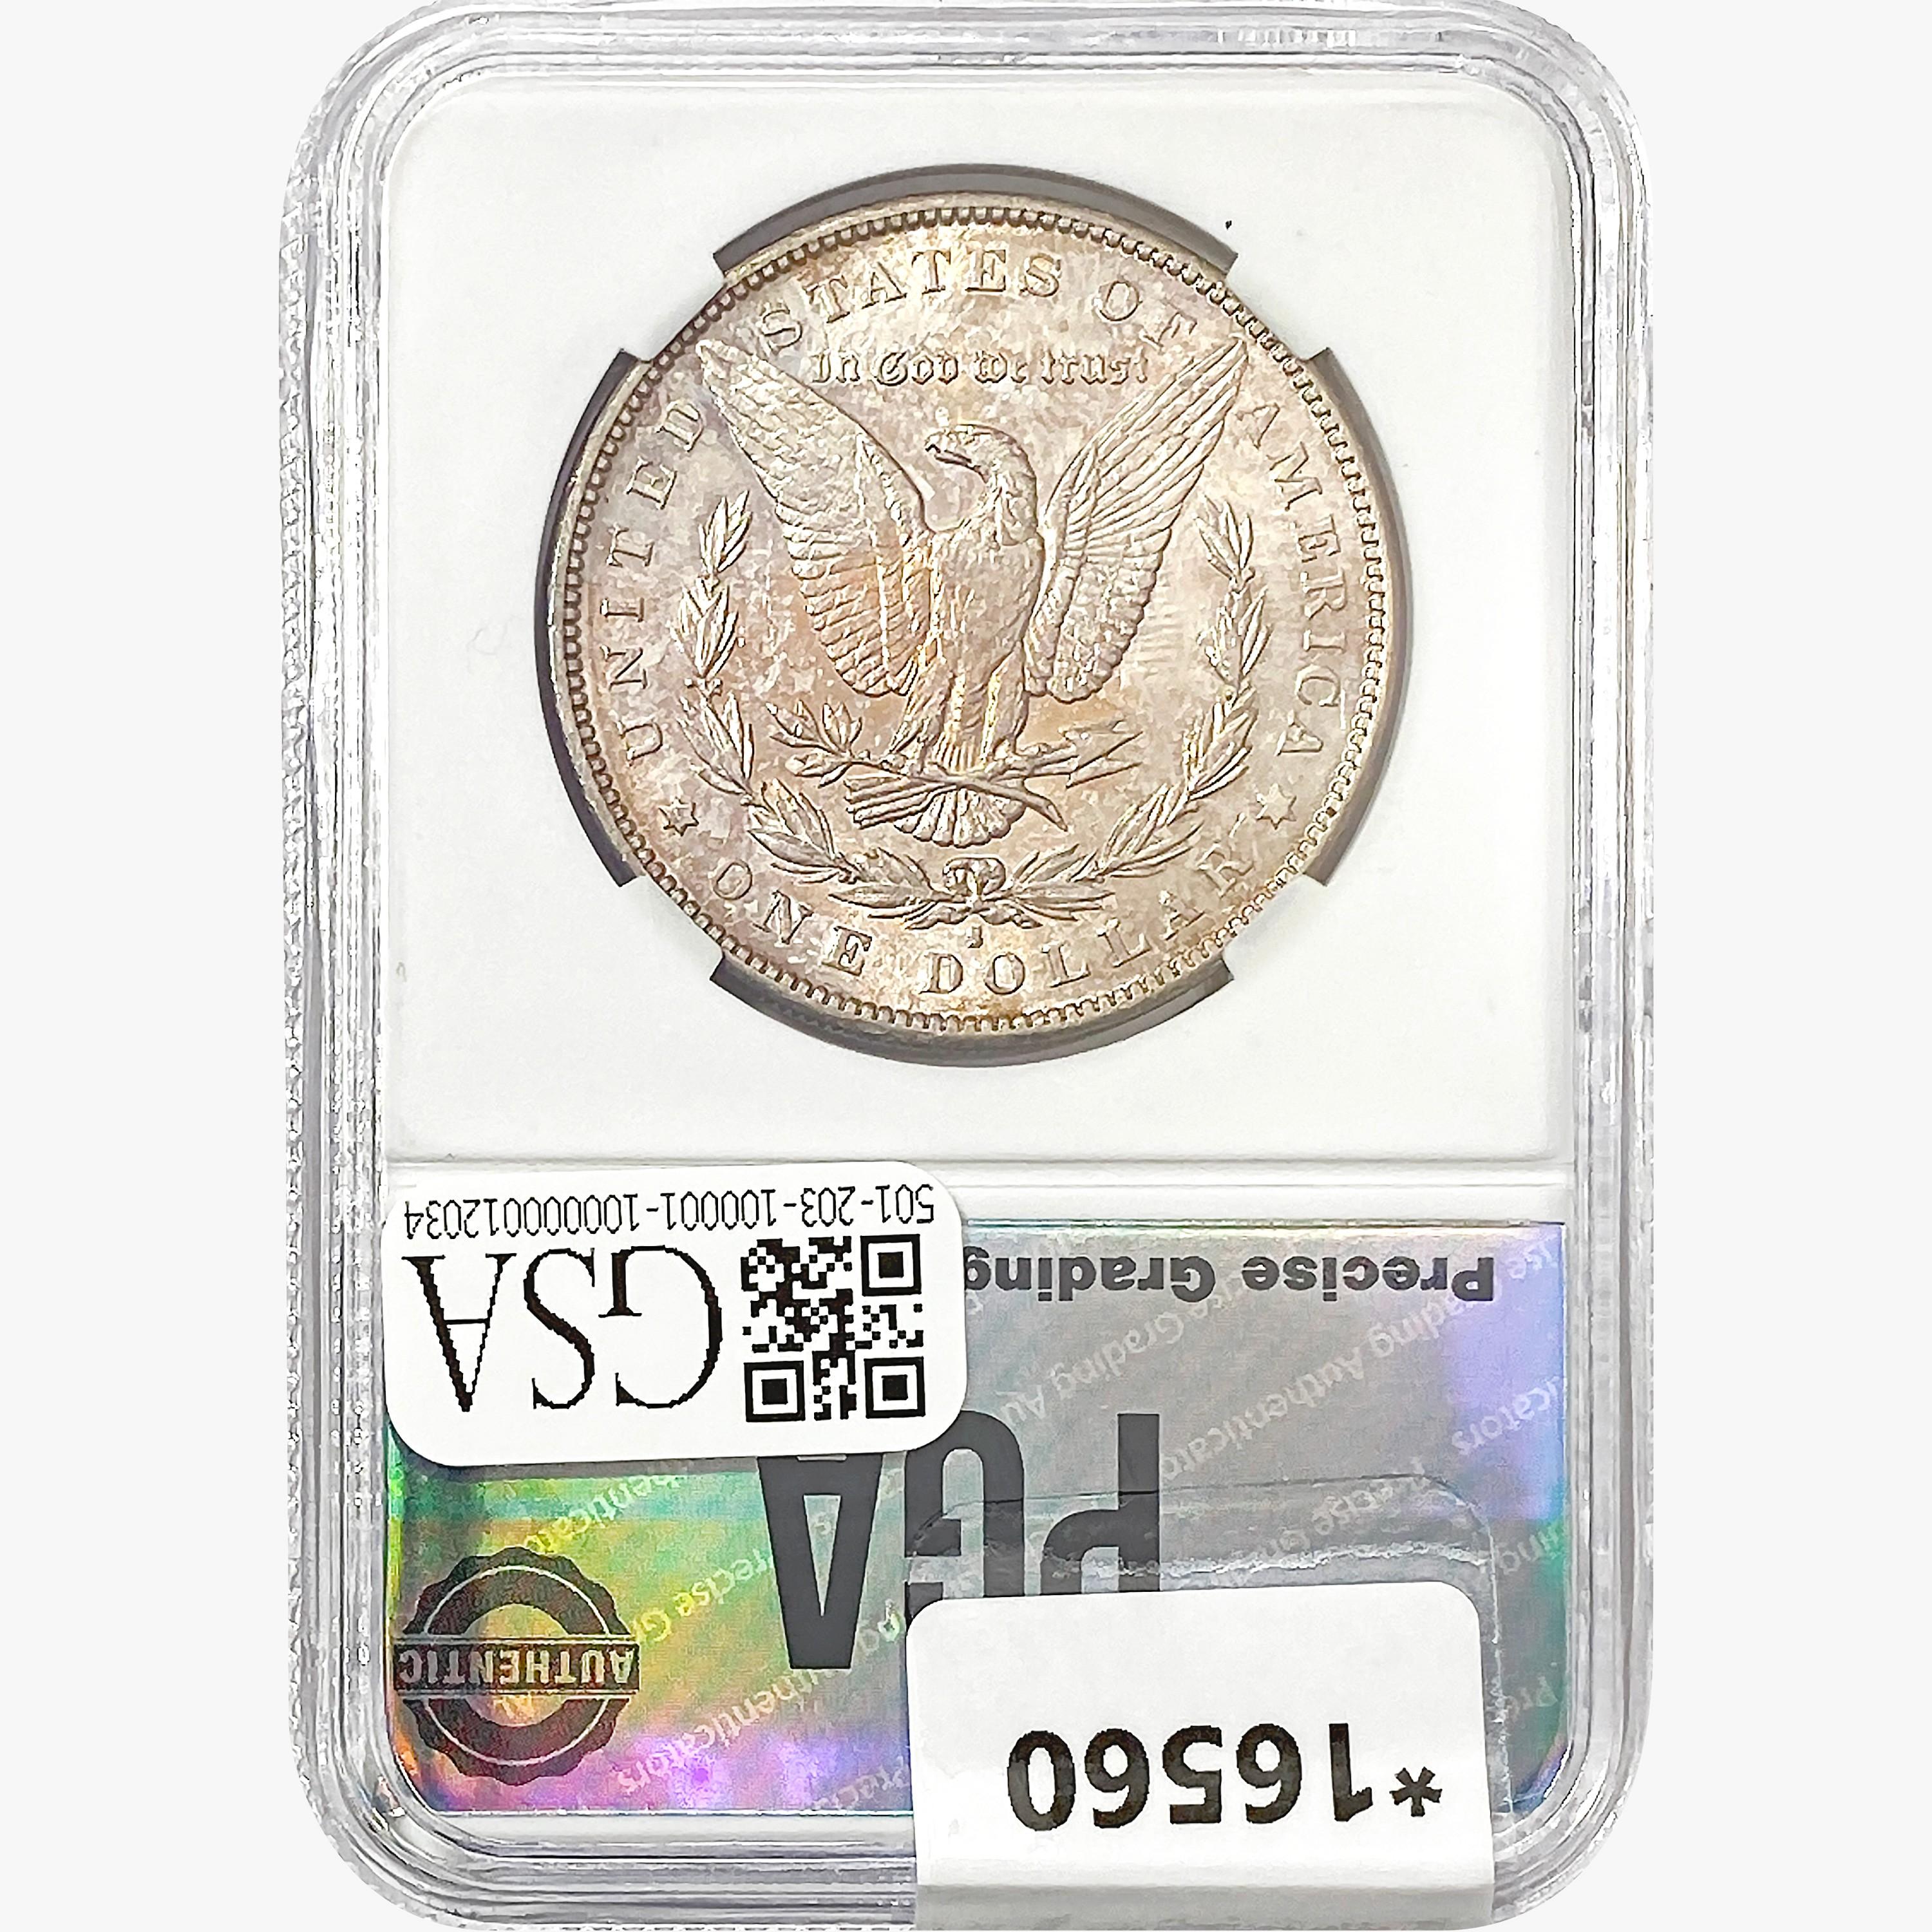 1891-S Morgan Silver Dollar PGA MS63+